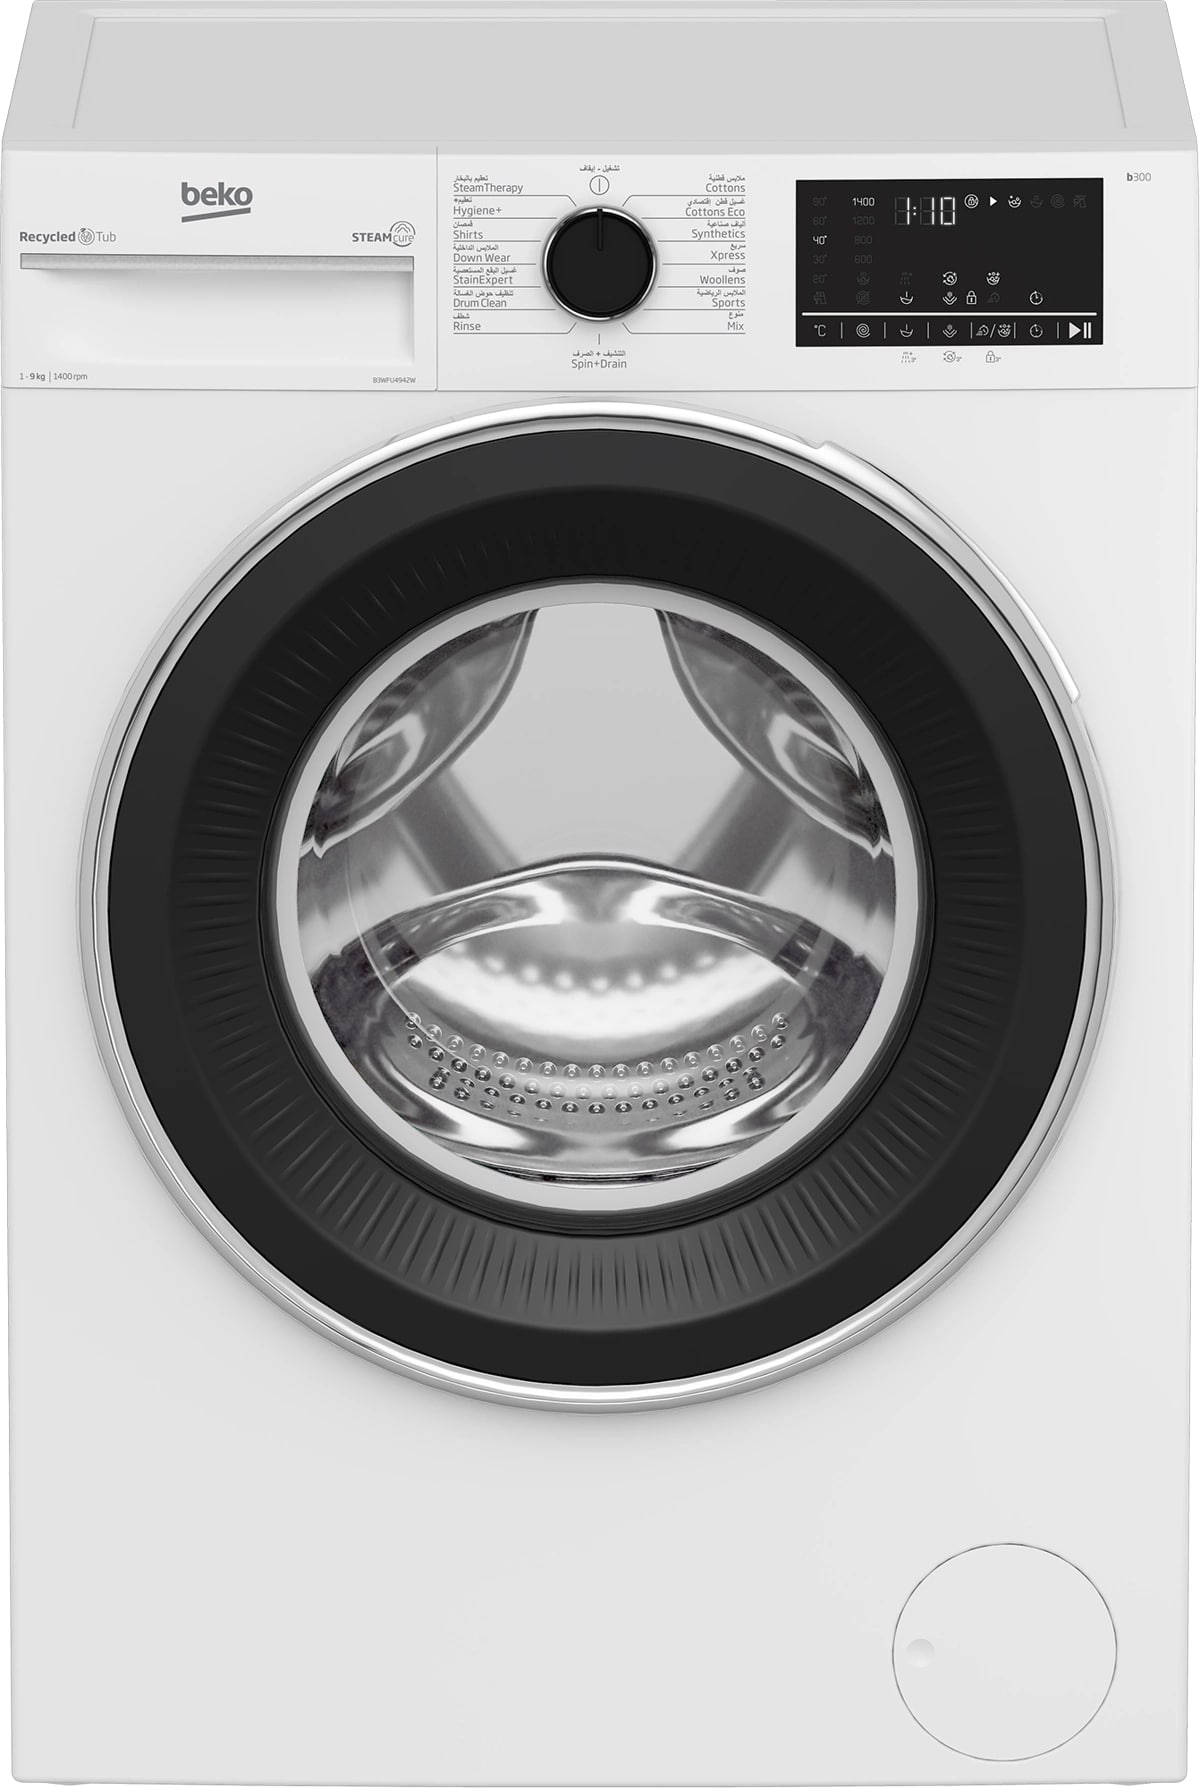 Beko Washing Machine, 9 kg, White Color, 1400 Cycles, 15 Programs, A+++